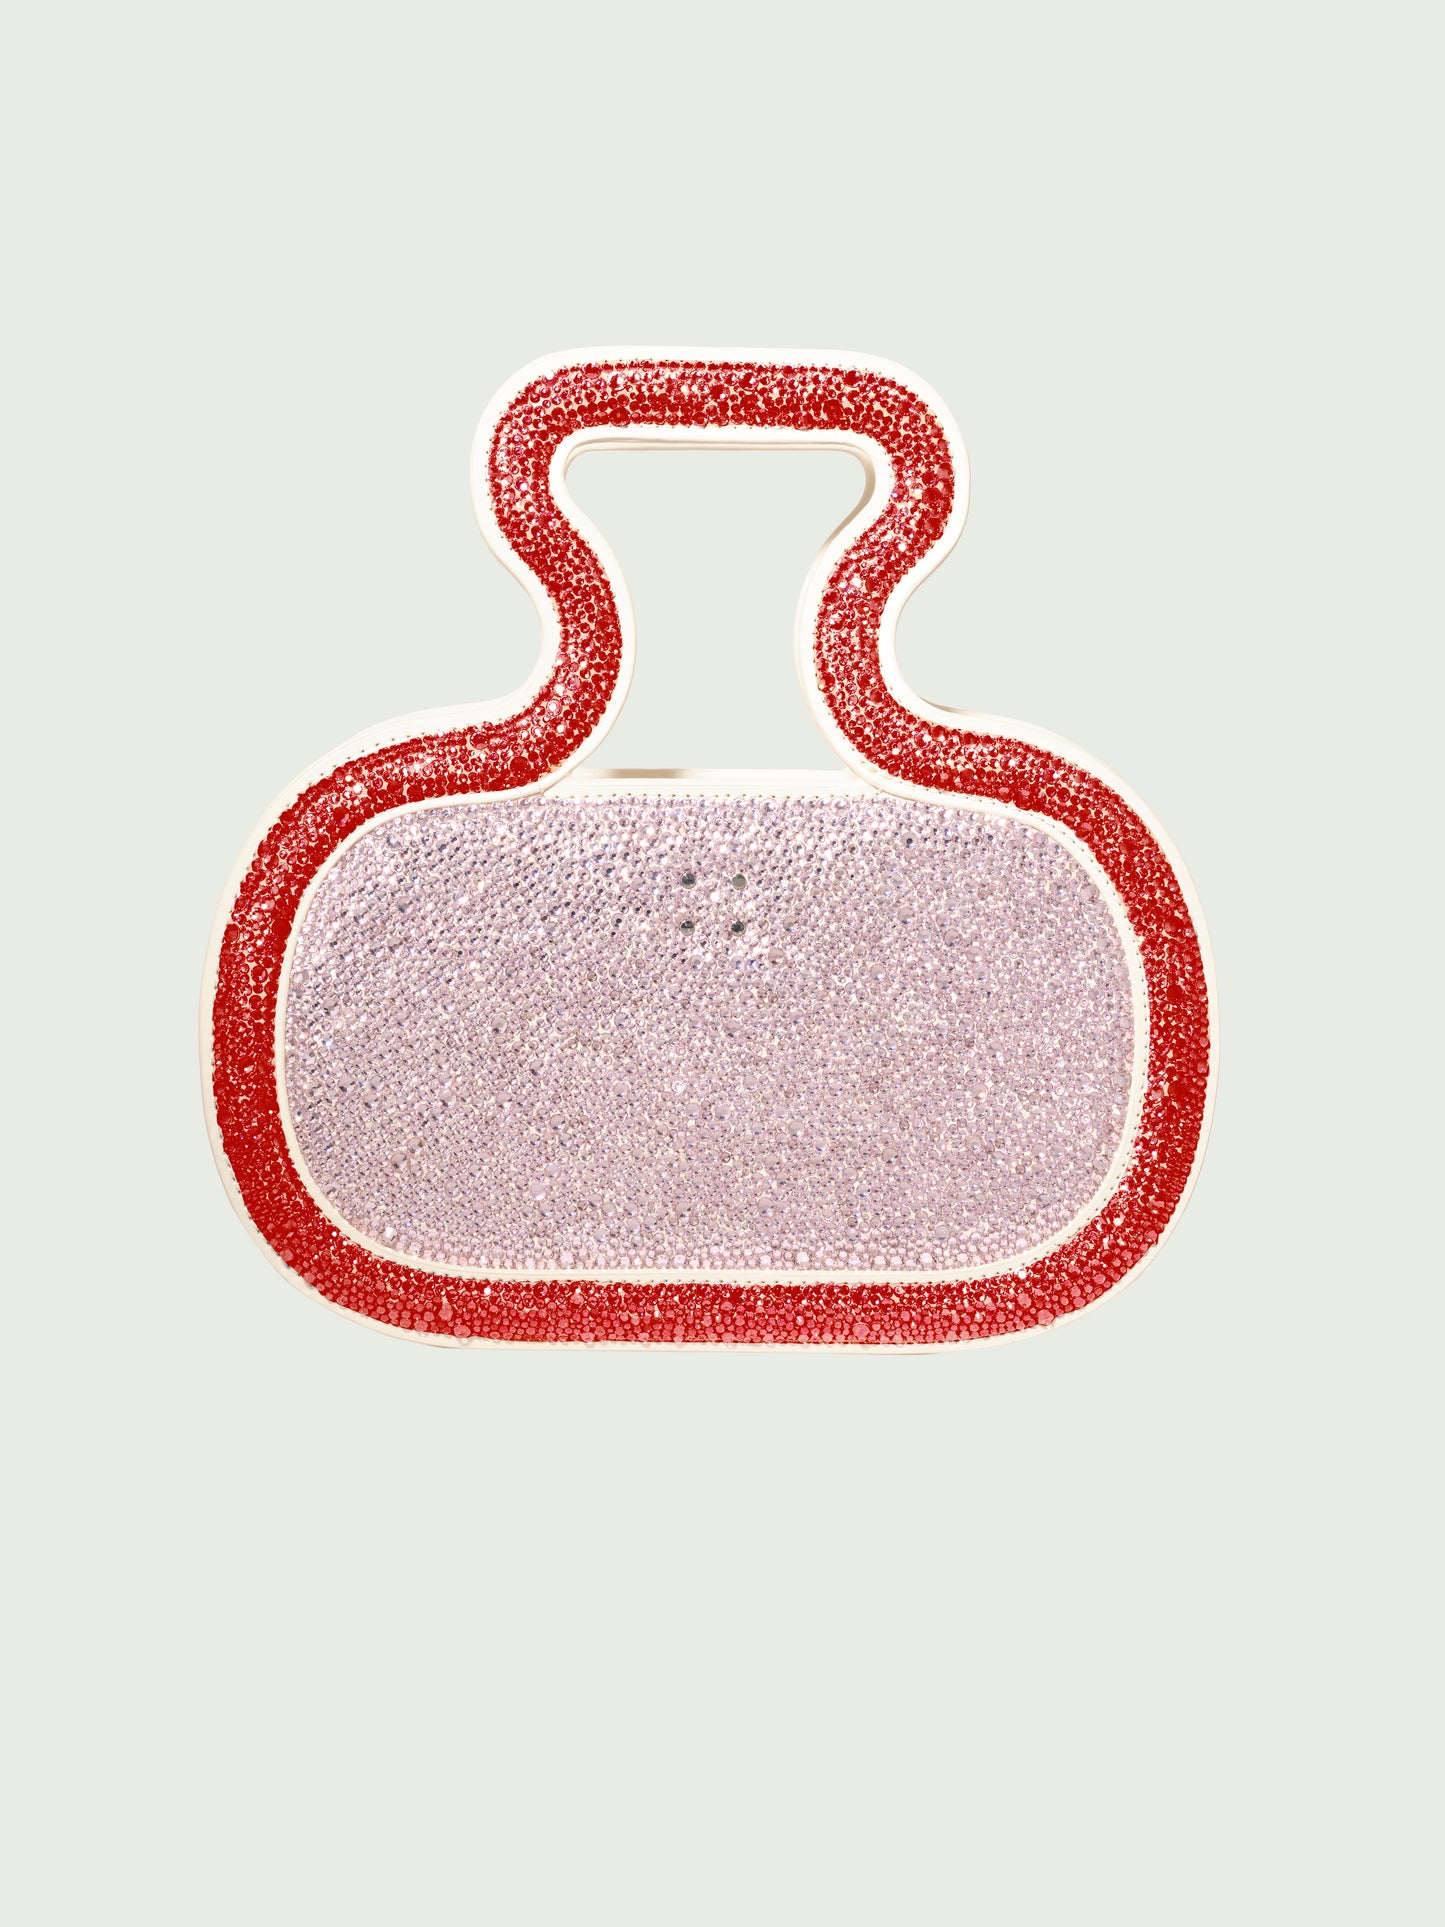 Silhoutte Bag in Baby Pink & Red Swarovski crystals